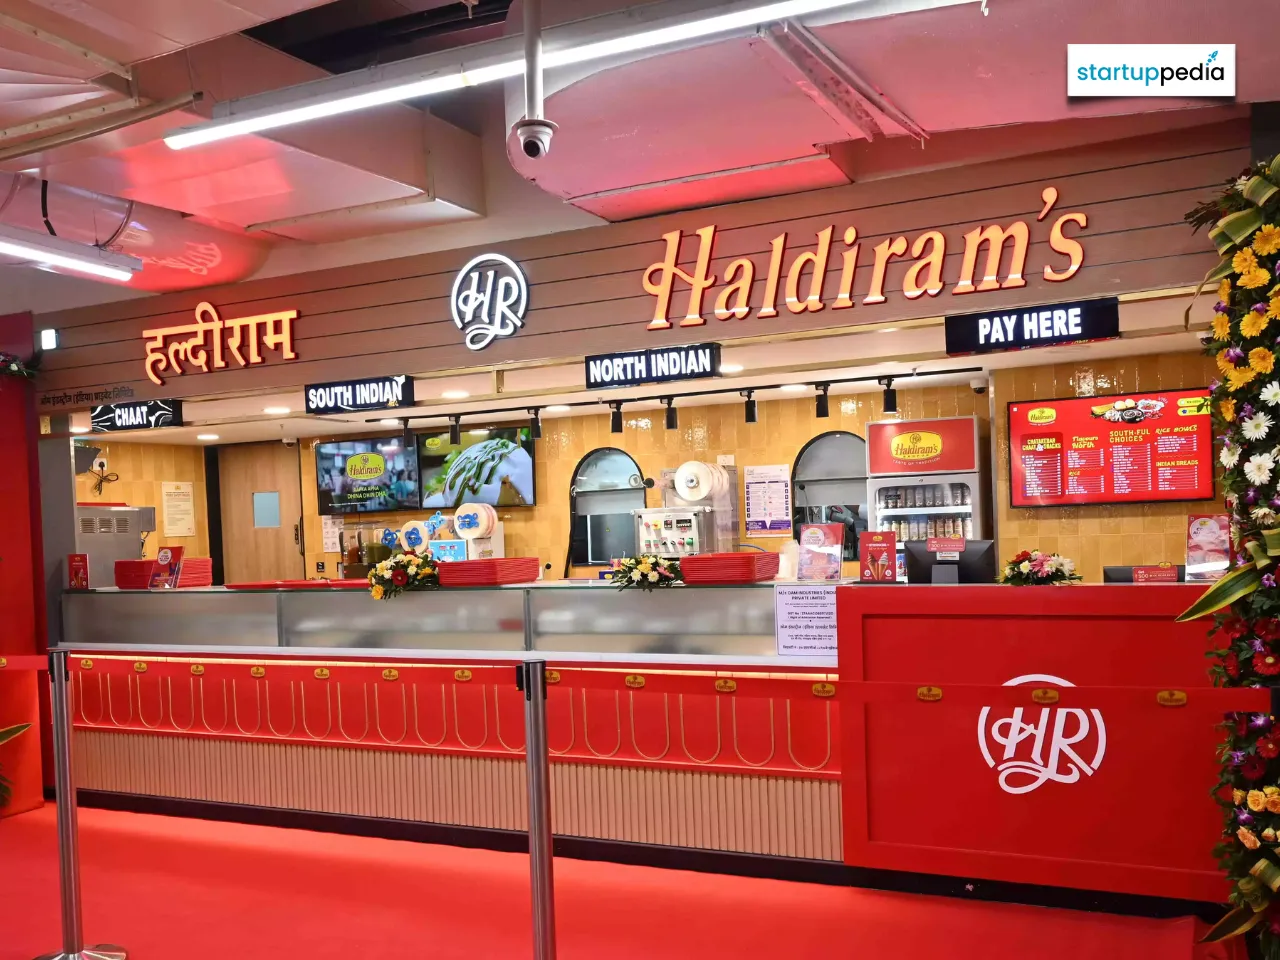 Big PE fund eyes a historic ₹50k+ Cr buyout deal for Haldiram's